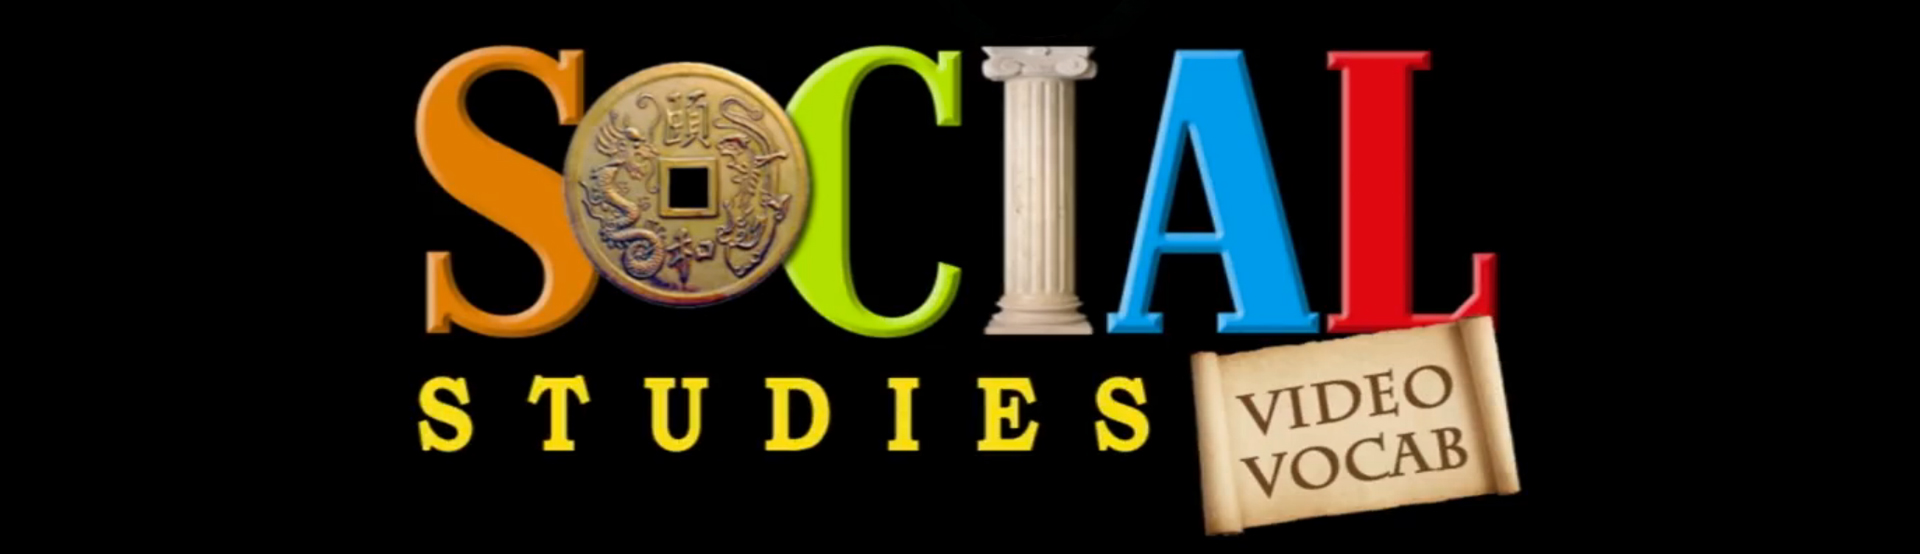 Social Studies Video Vocab